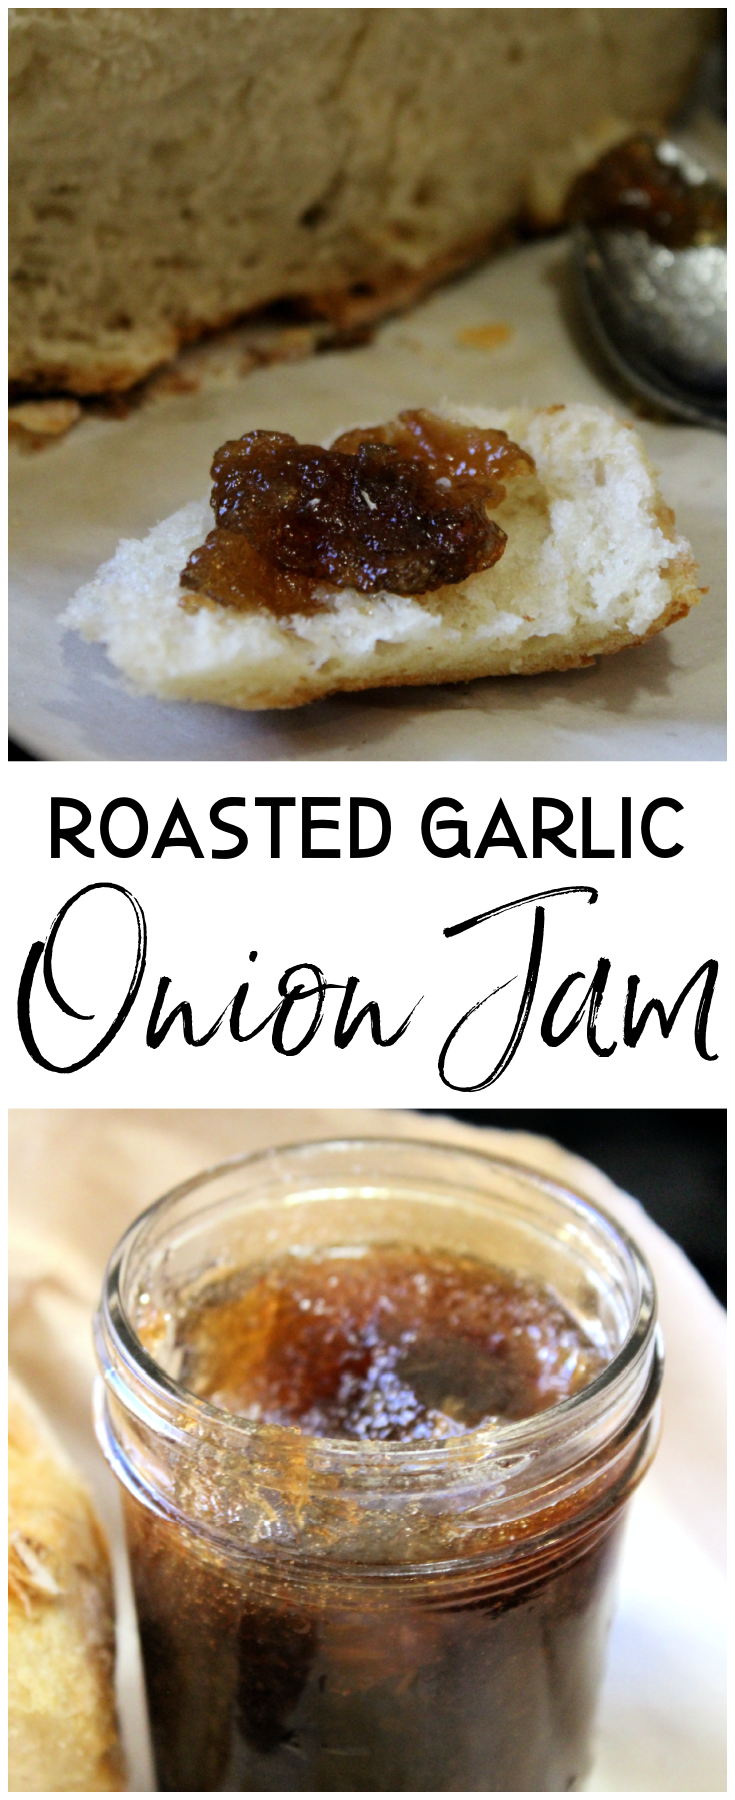 Roasted Garlic Onion Jam